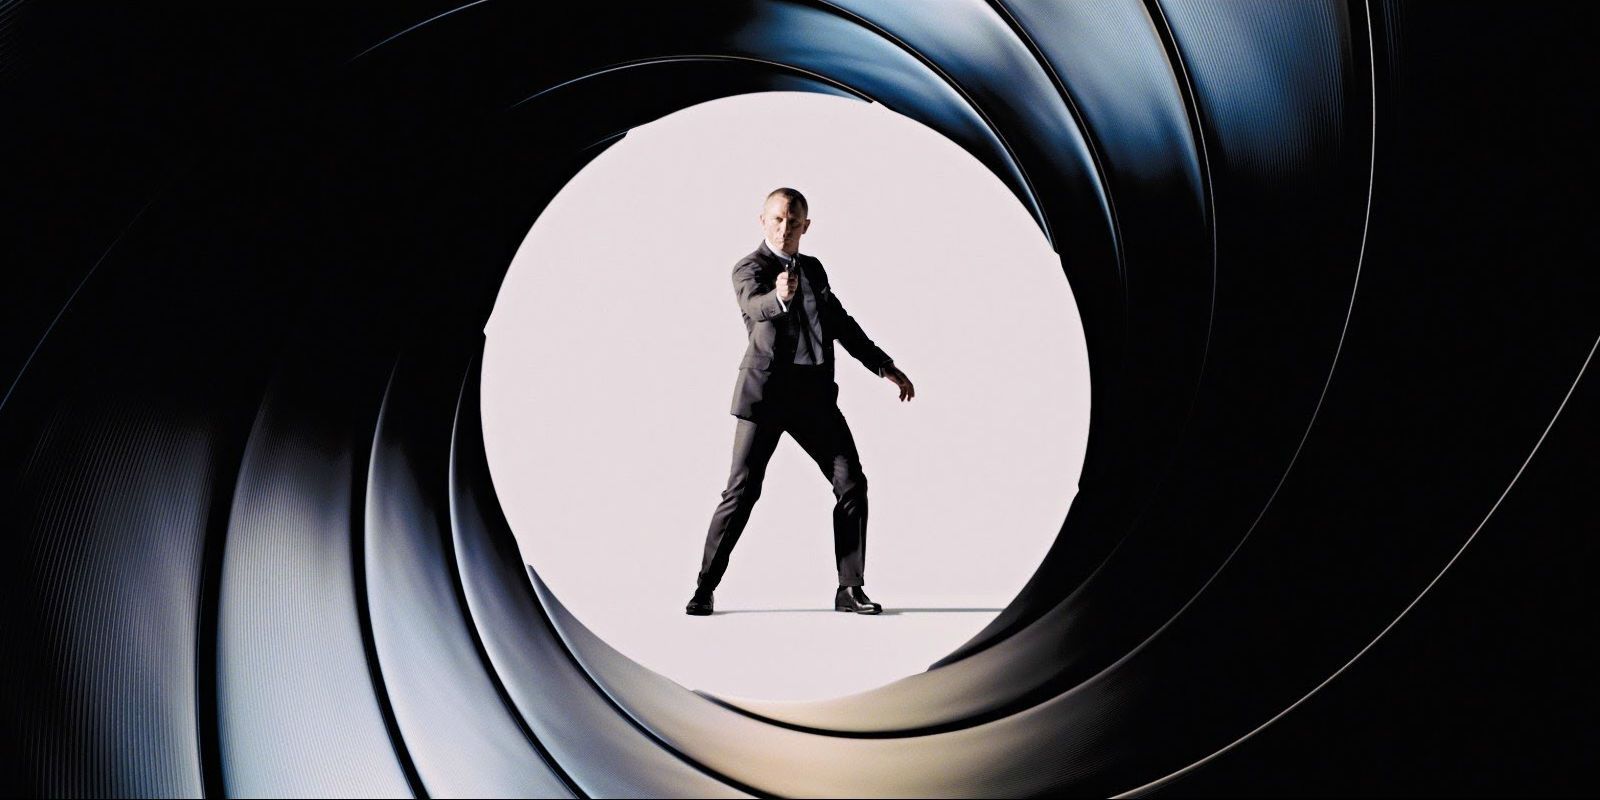 Gun Barrel 3 James Bond opening scene OHMSS Downtoscale*KIT*75mm ICON Figure. 